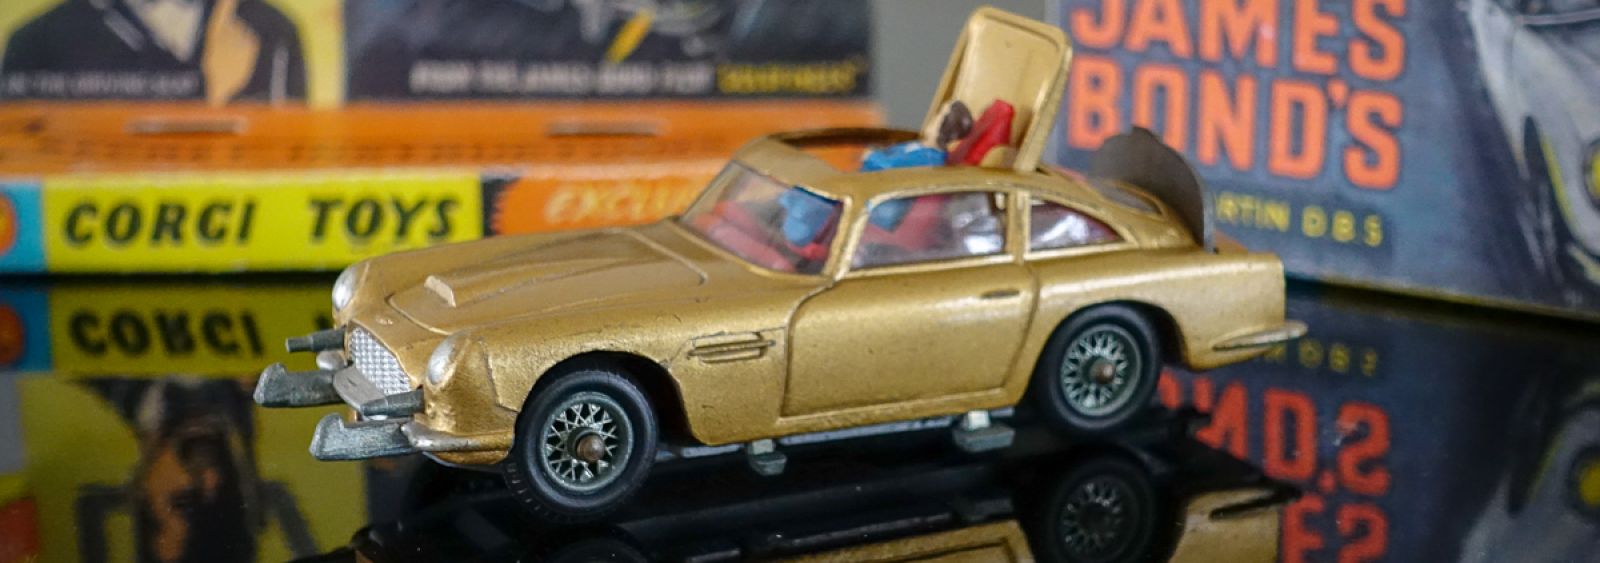 corgi model cars for sale